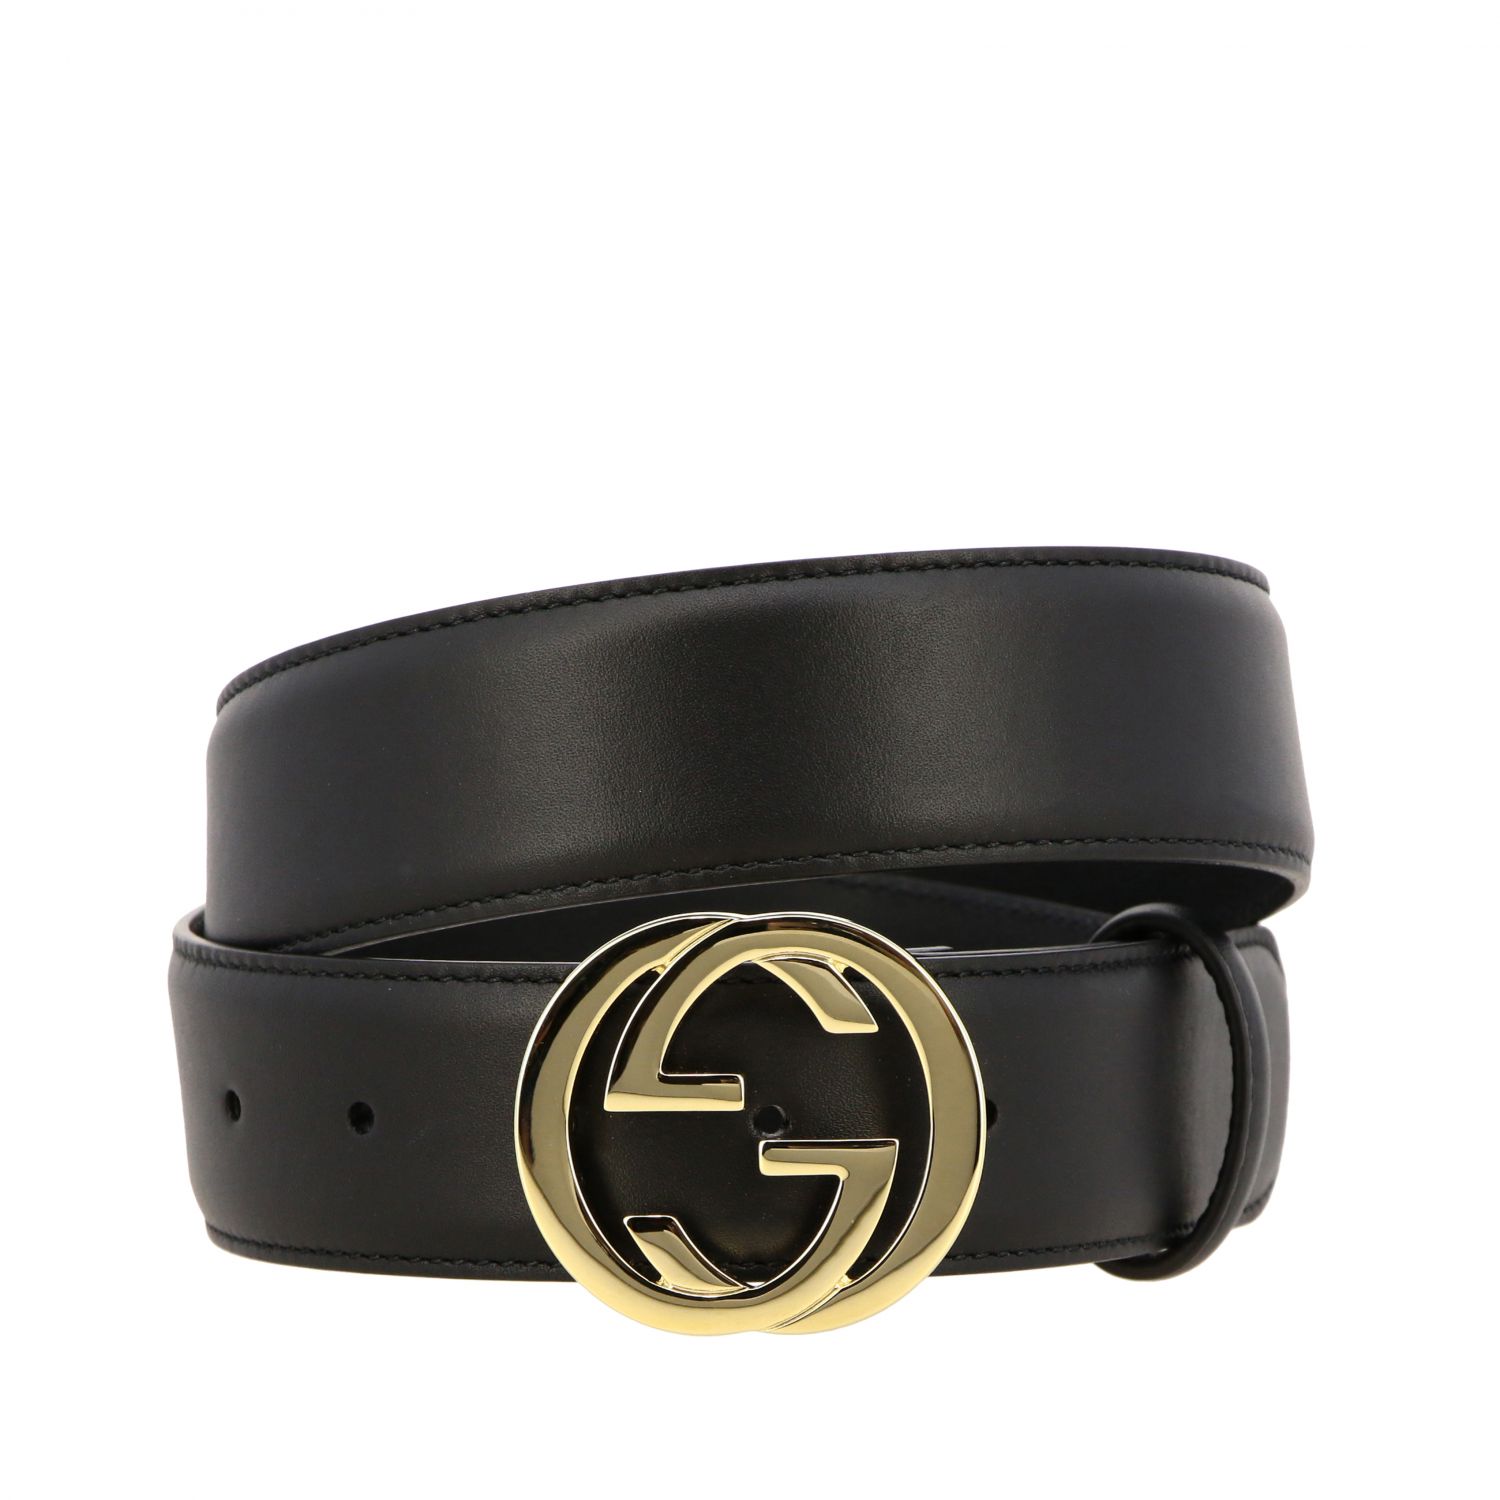 GUCCI: leather belt with GG buckle | Belt Gucci Women Black | Belt ...